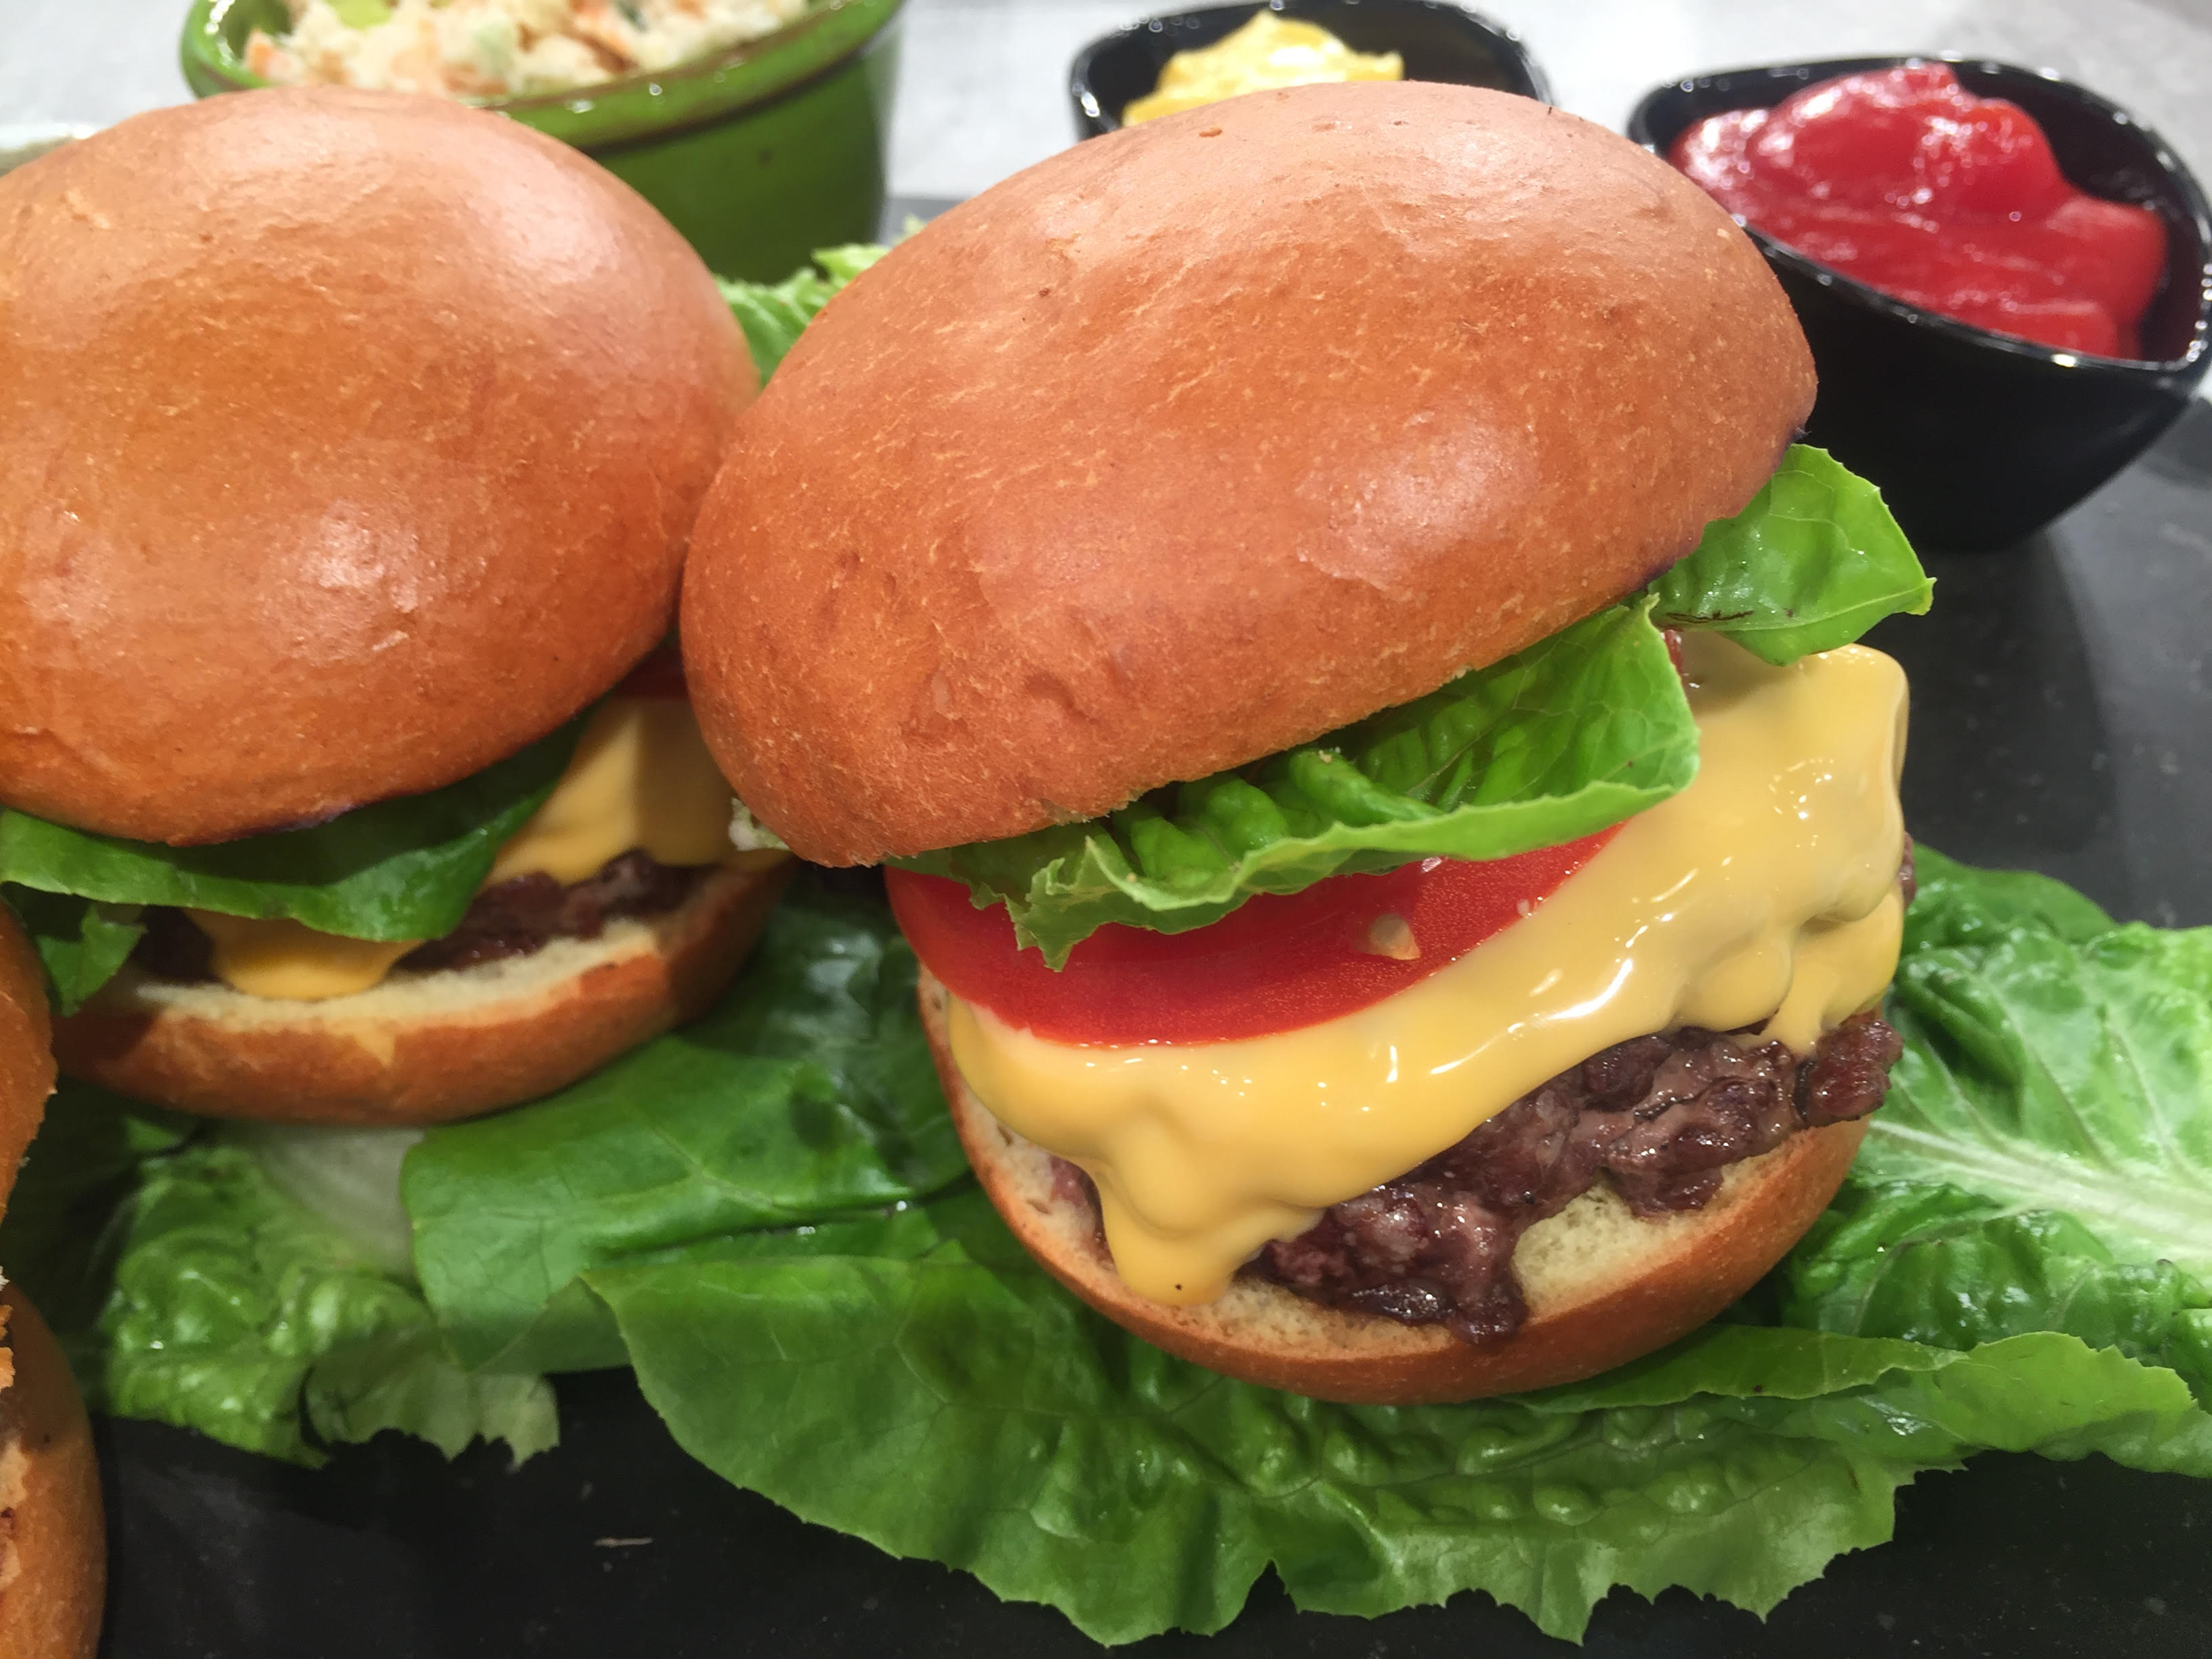 Cheeseburger από την Αργυρώ Μπαρμπαρίγου | Αυθεντική νοστιμιά, από την αρχή μέχρι το τέλος φτιαγμένη από σας!